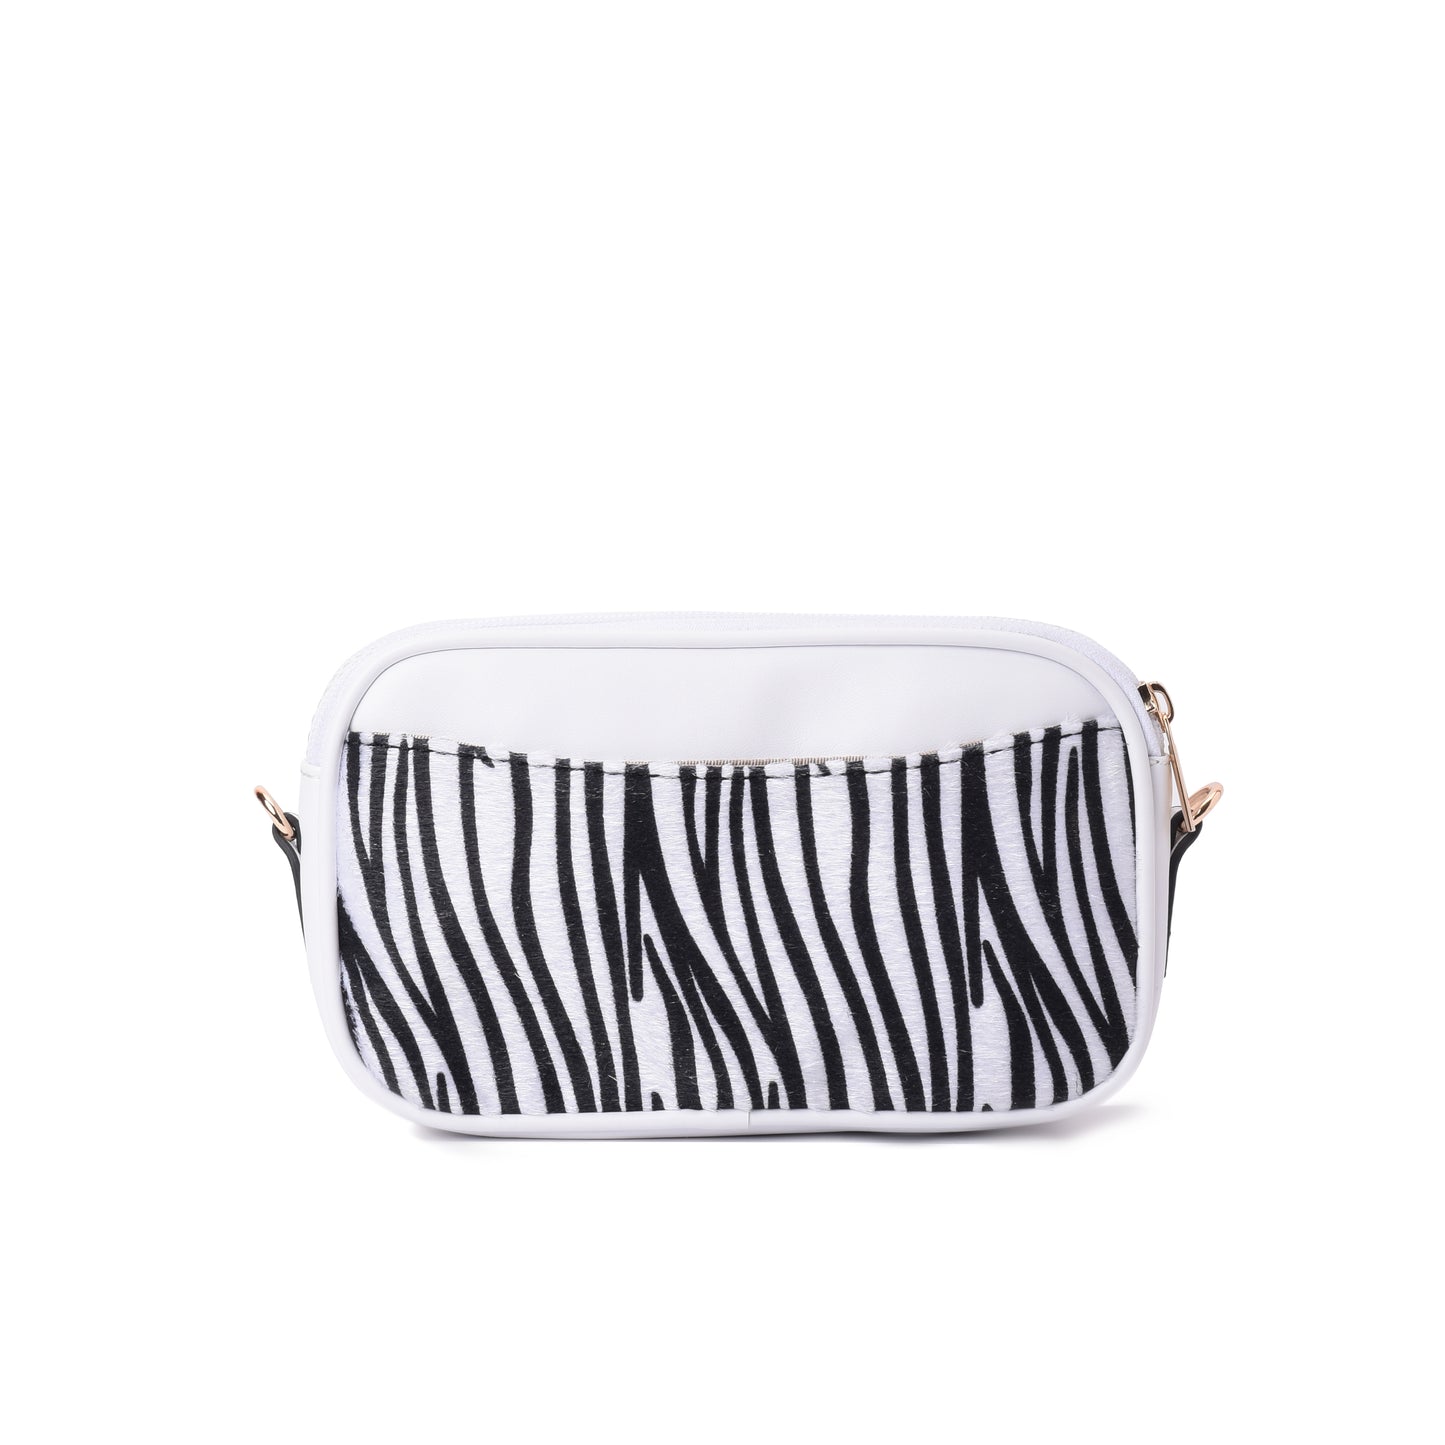 Burst Zebra Handbag - Code 942